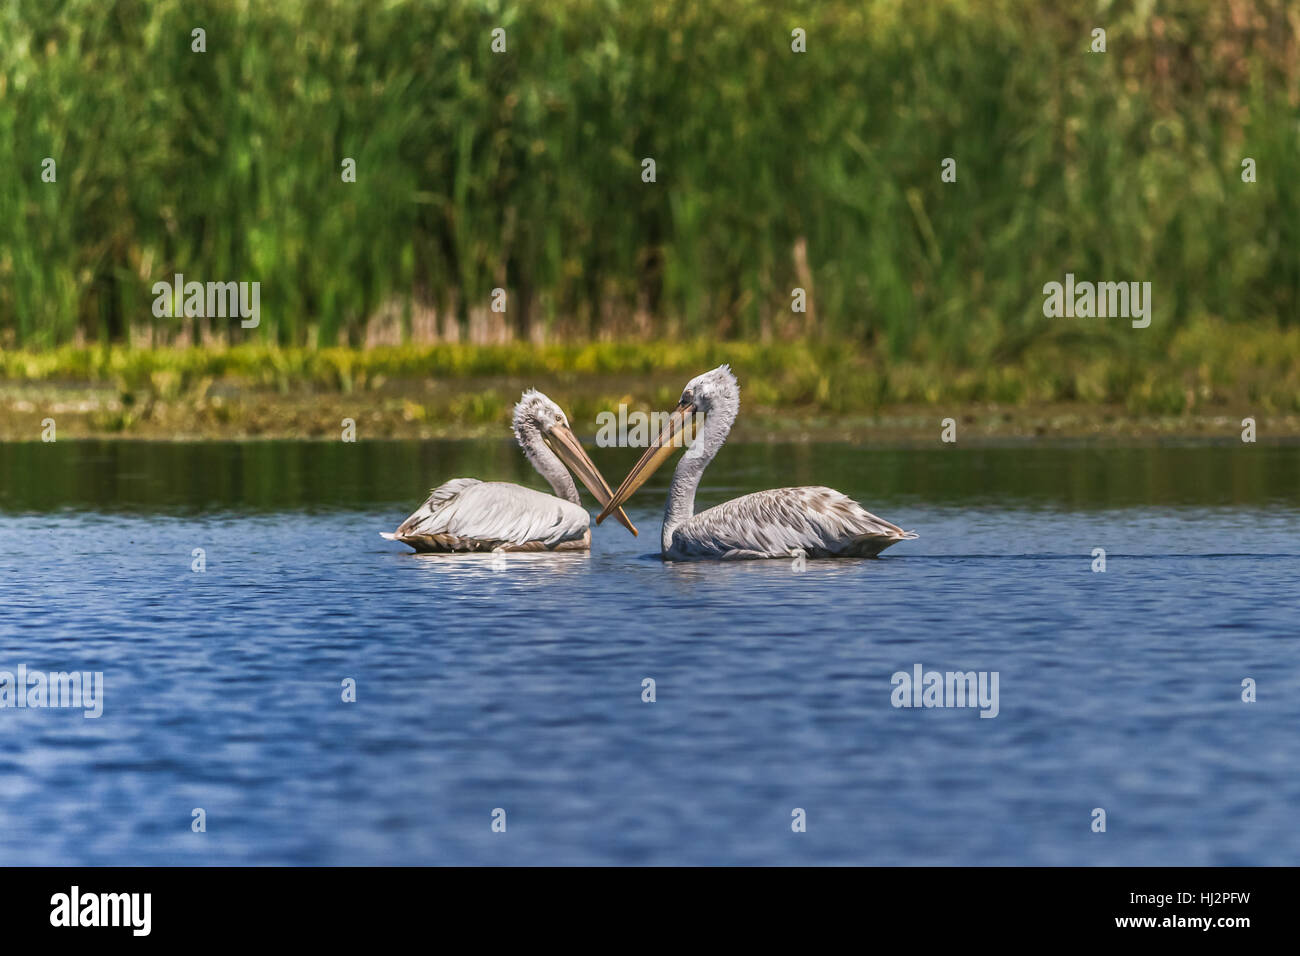 animal, bird, wildlife, pelican, dalmatian, danube delta, nature, single, Stock Photo